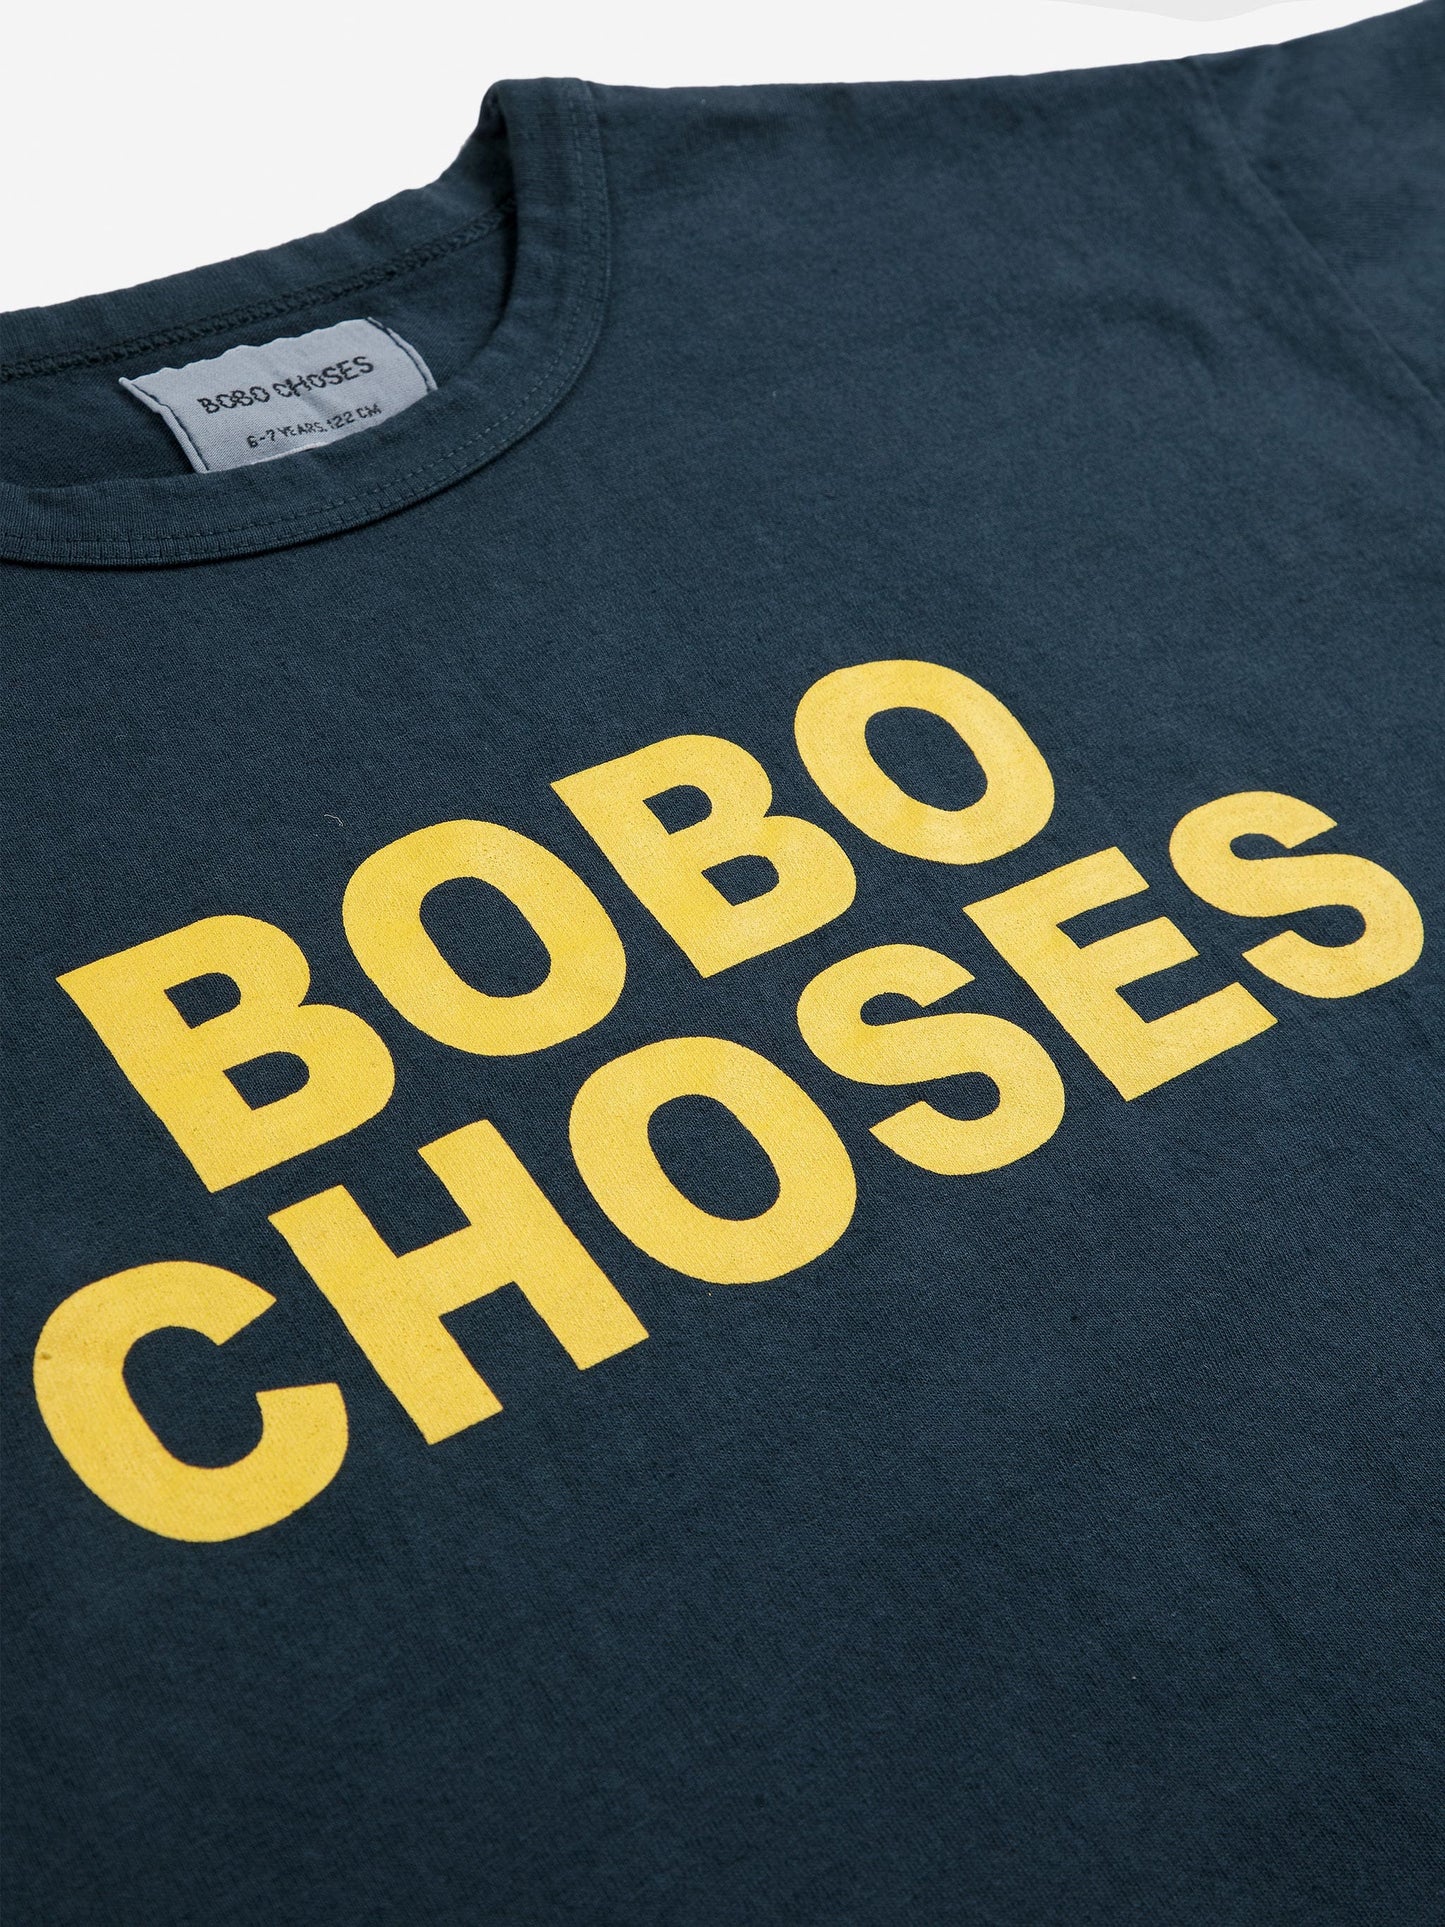 Bobo Choses navy T-shirt